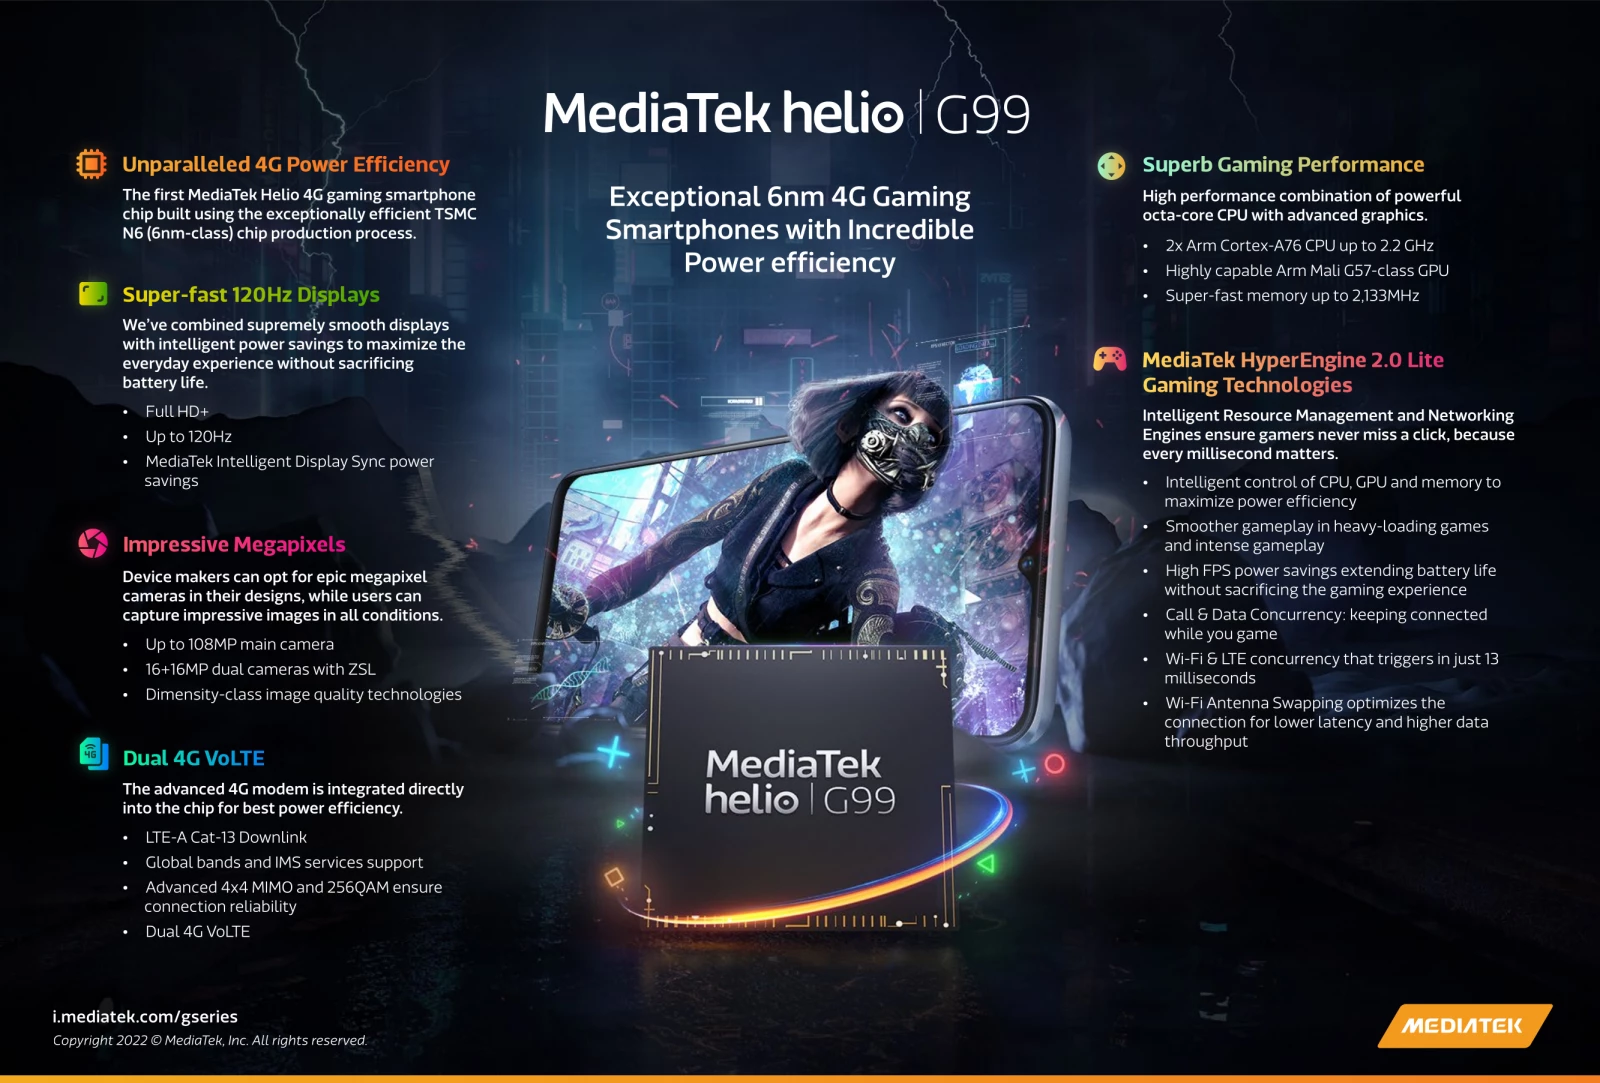 Helio G99 Mediatek